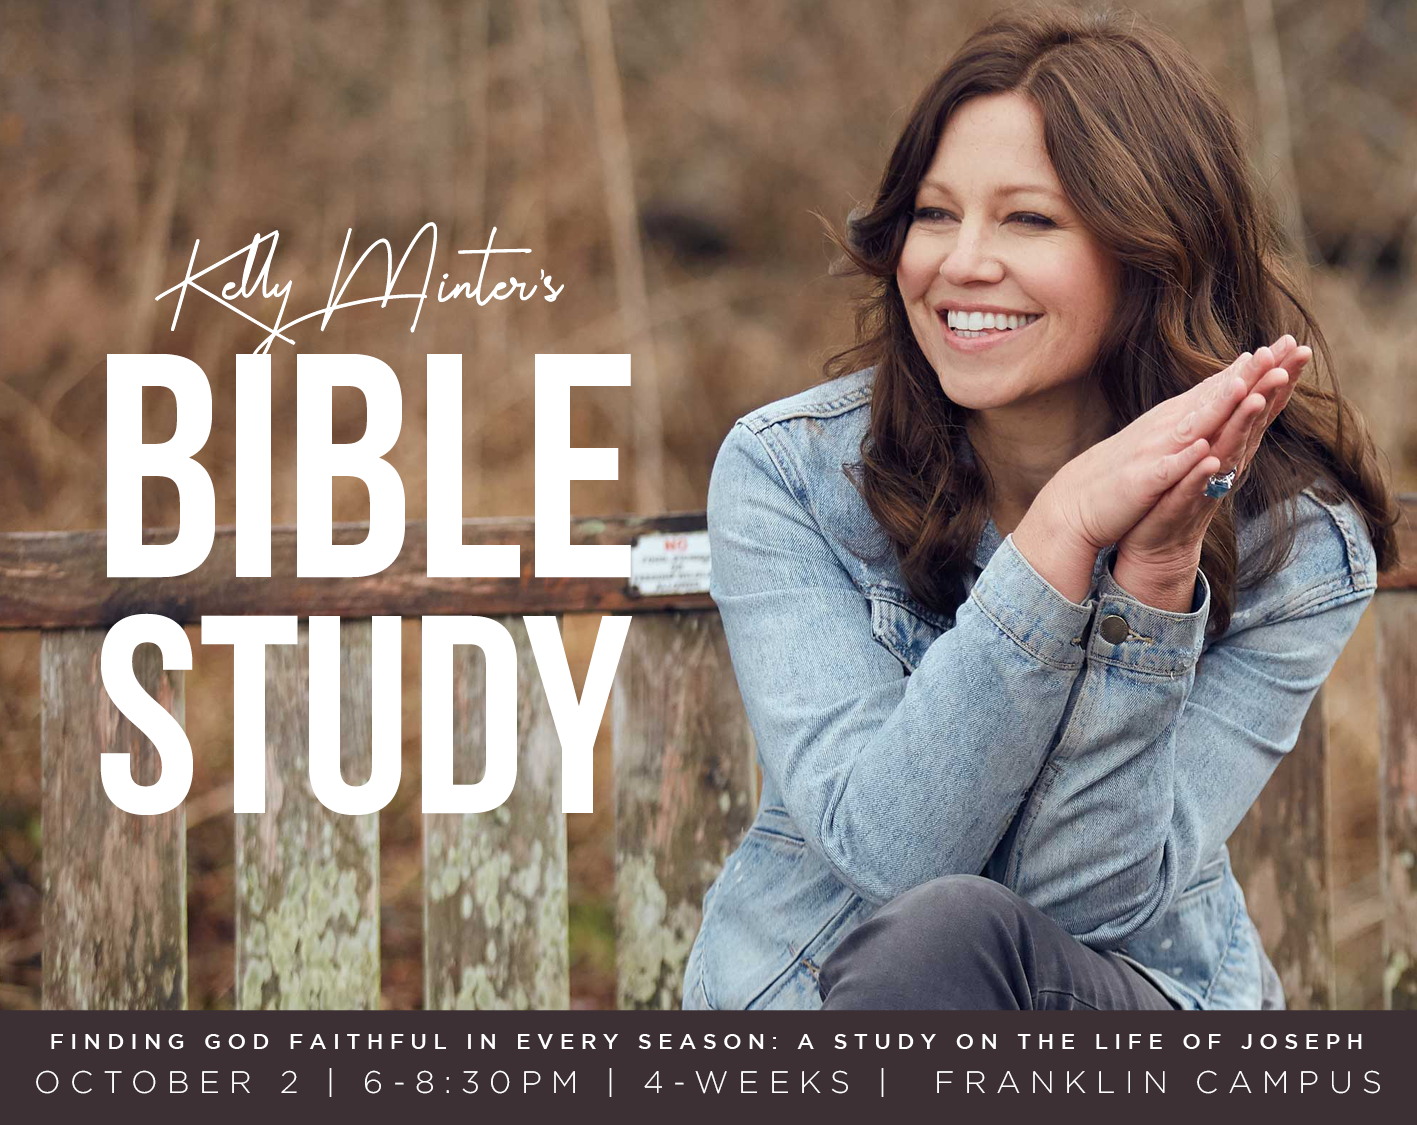 Kelly Minter's Bible Study